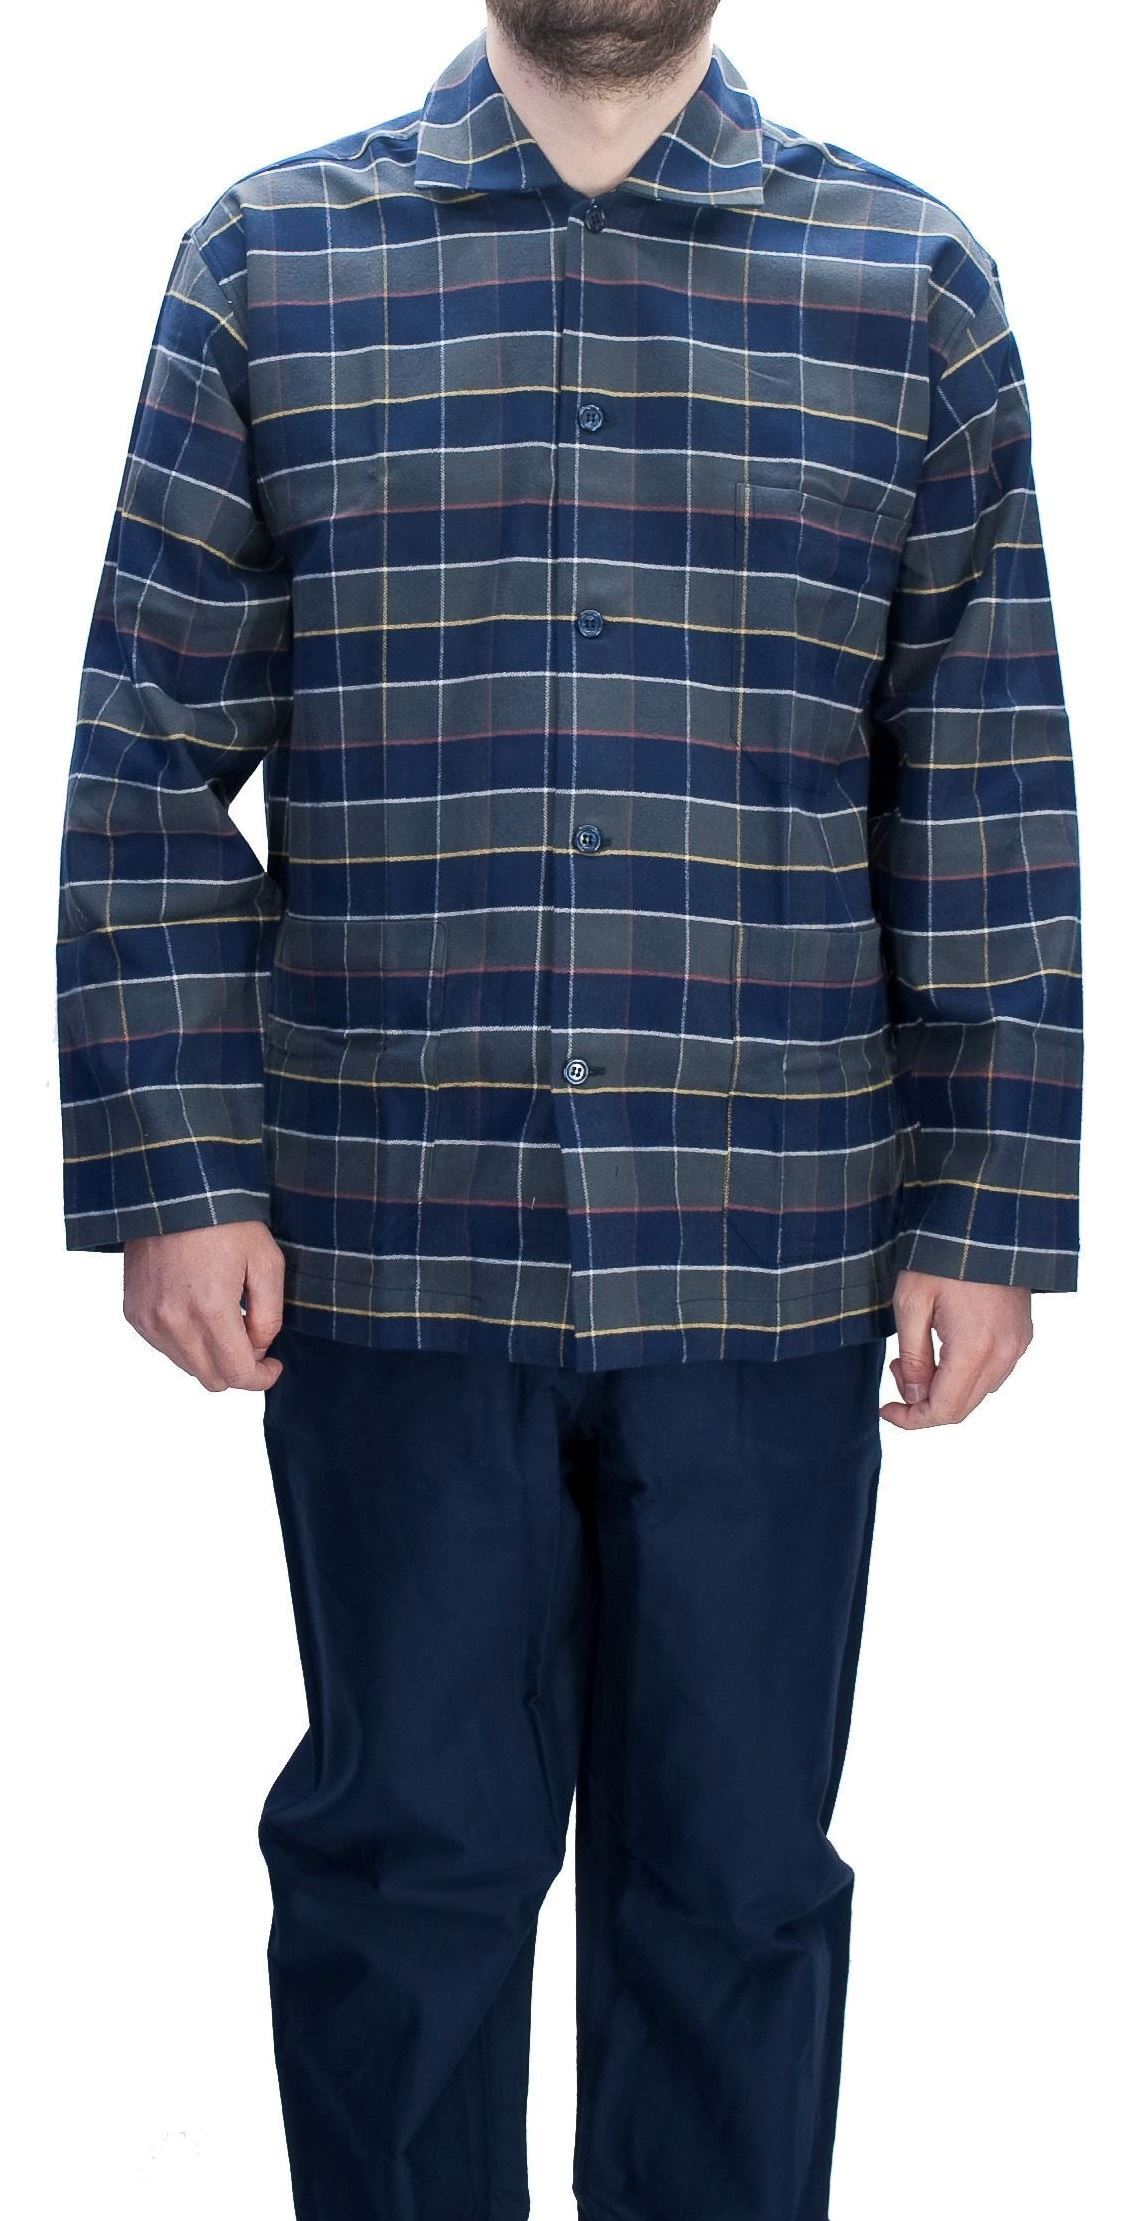 Picture of Blue pattern men's cotton flannel pajamas